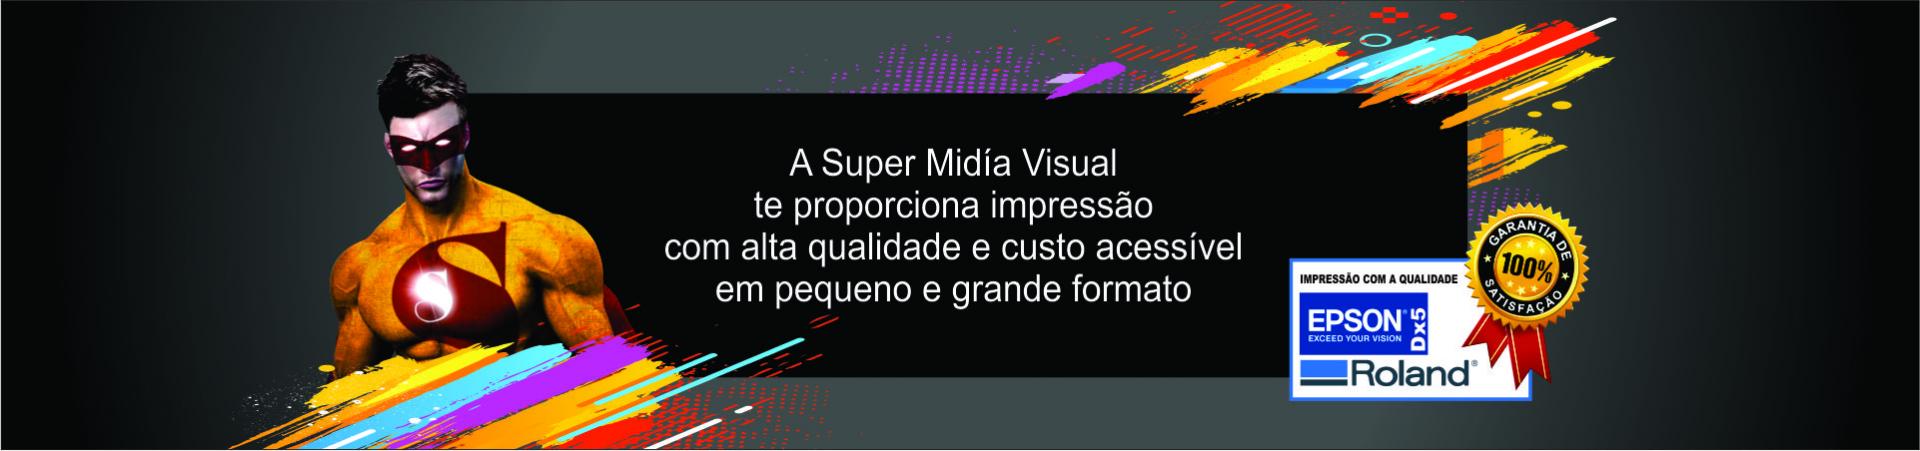 Super Mídia Visual